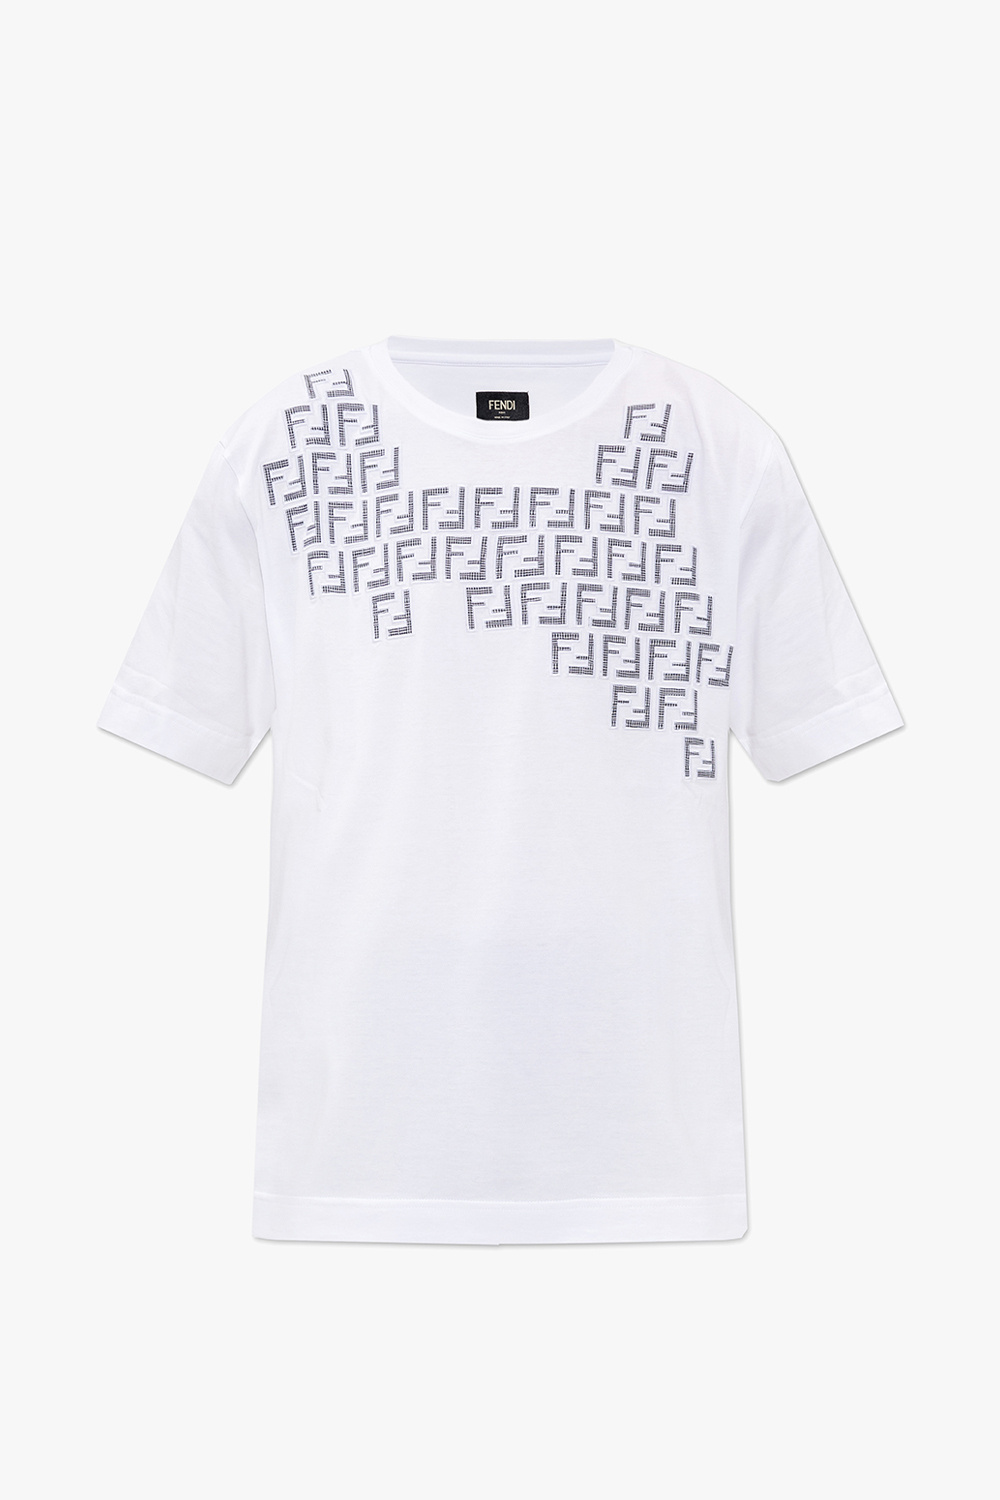 Fendi T-shirt with logo | Men's Clothing | Vitkac